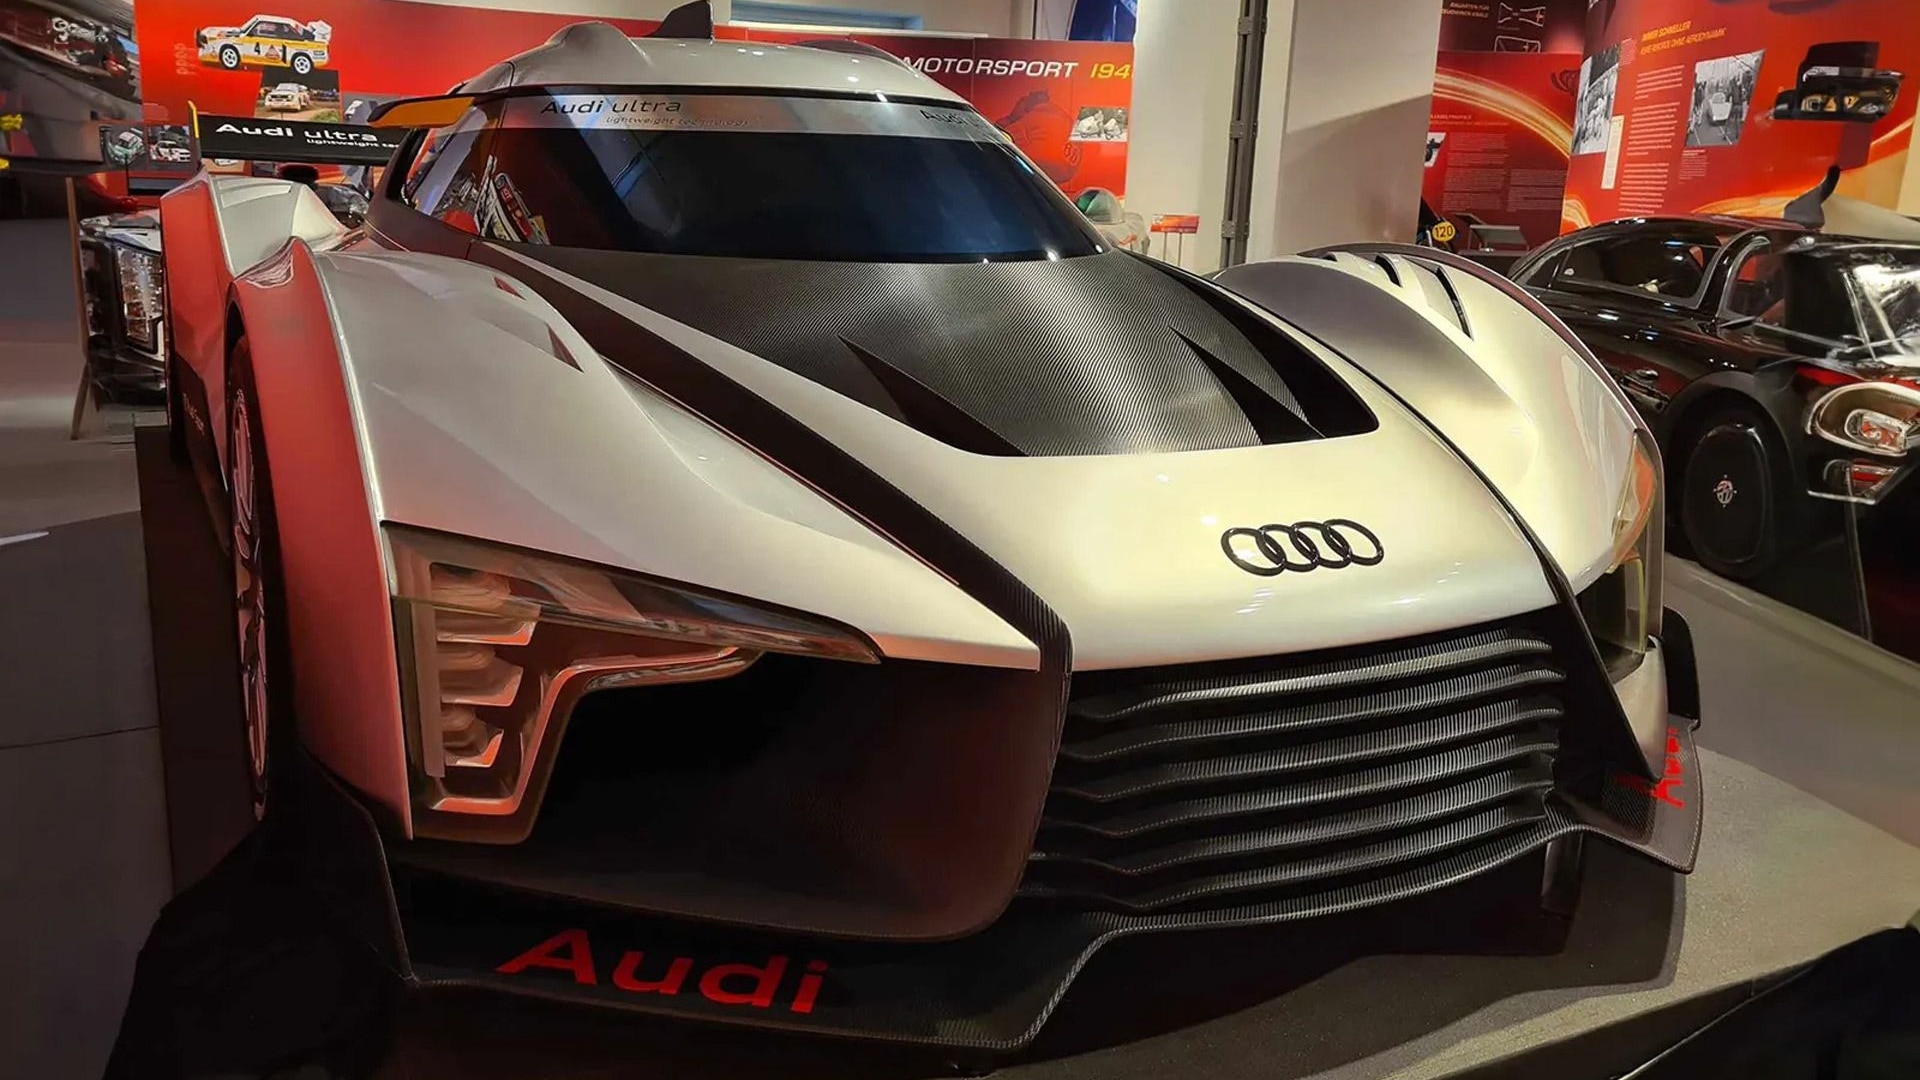 Secret Audi Skorpion concept from 2013 - Photo credit: August Horch Museum